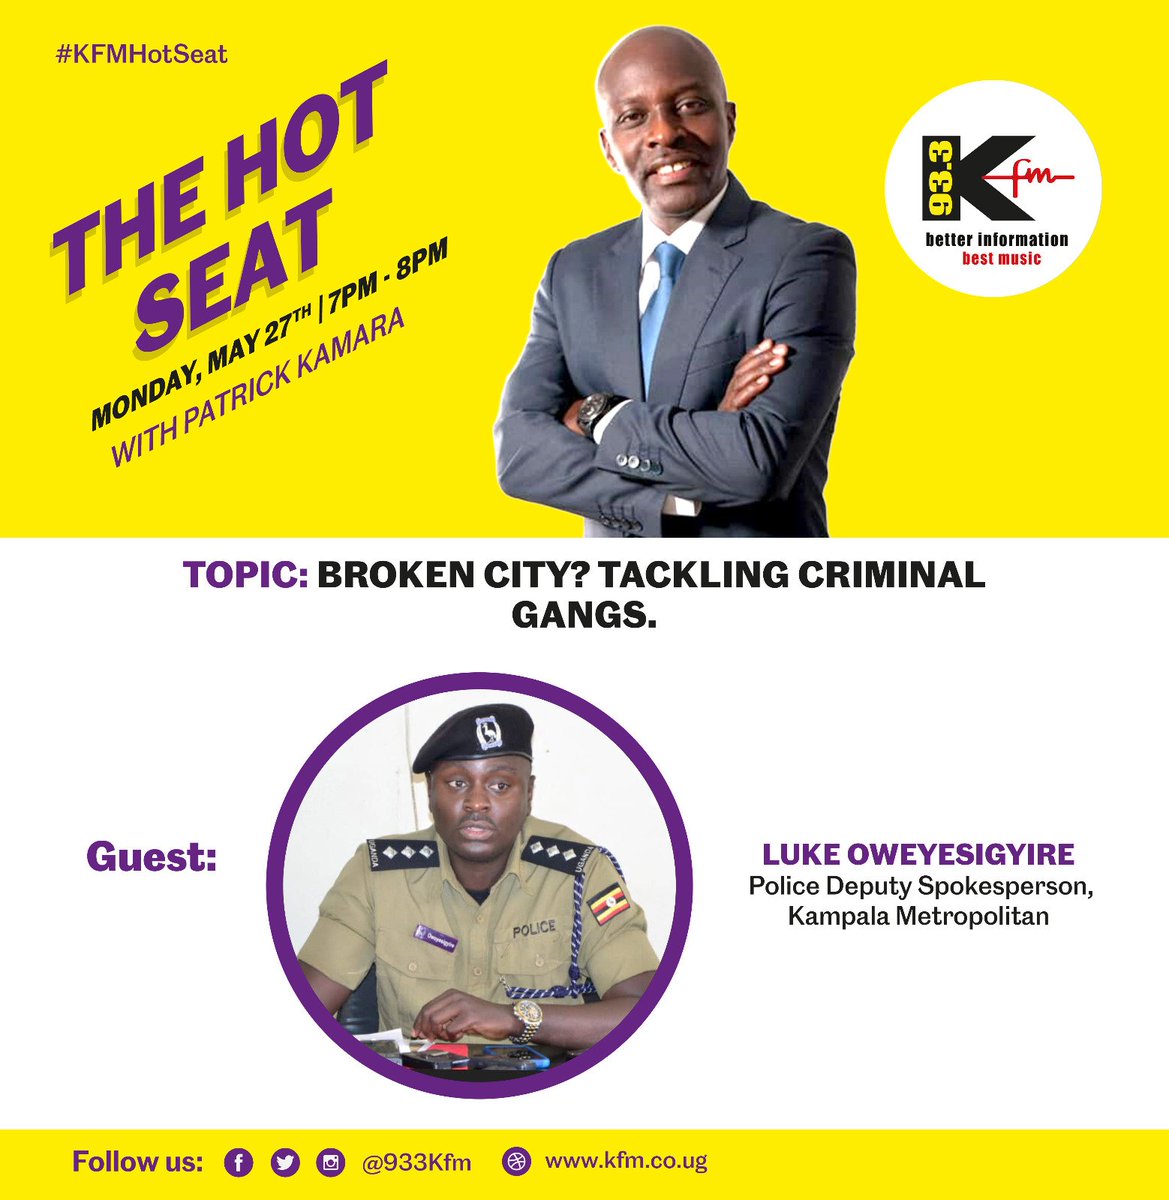 Don't miss tonight's #KFMHotSeat with Patrick Kamara as he hosts @Lukowoyesigyire, the deputy spokesperson for Kampala Metropolitan Police. Topic: Broken City? Tickling criminal gangs. Time: 7pm